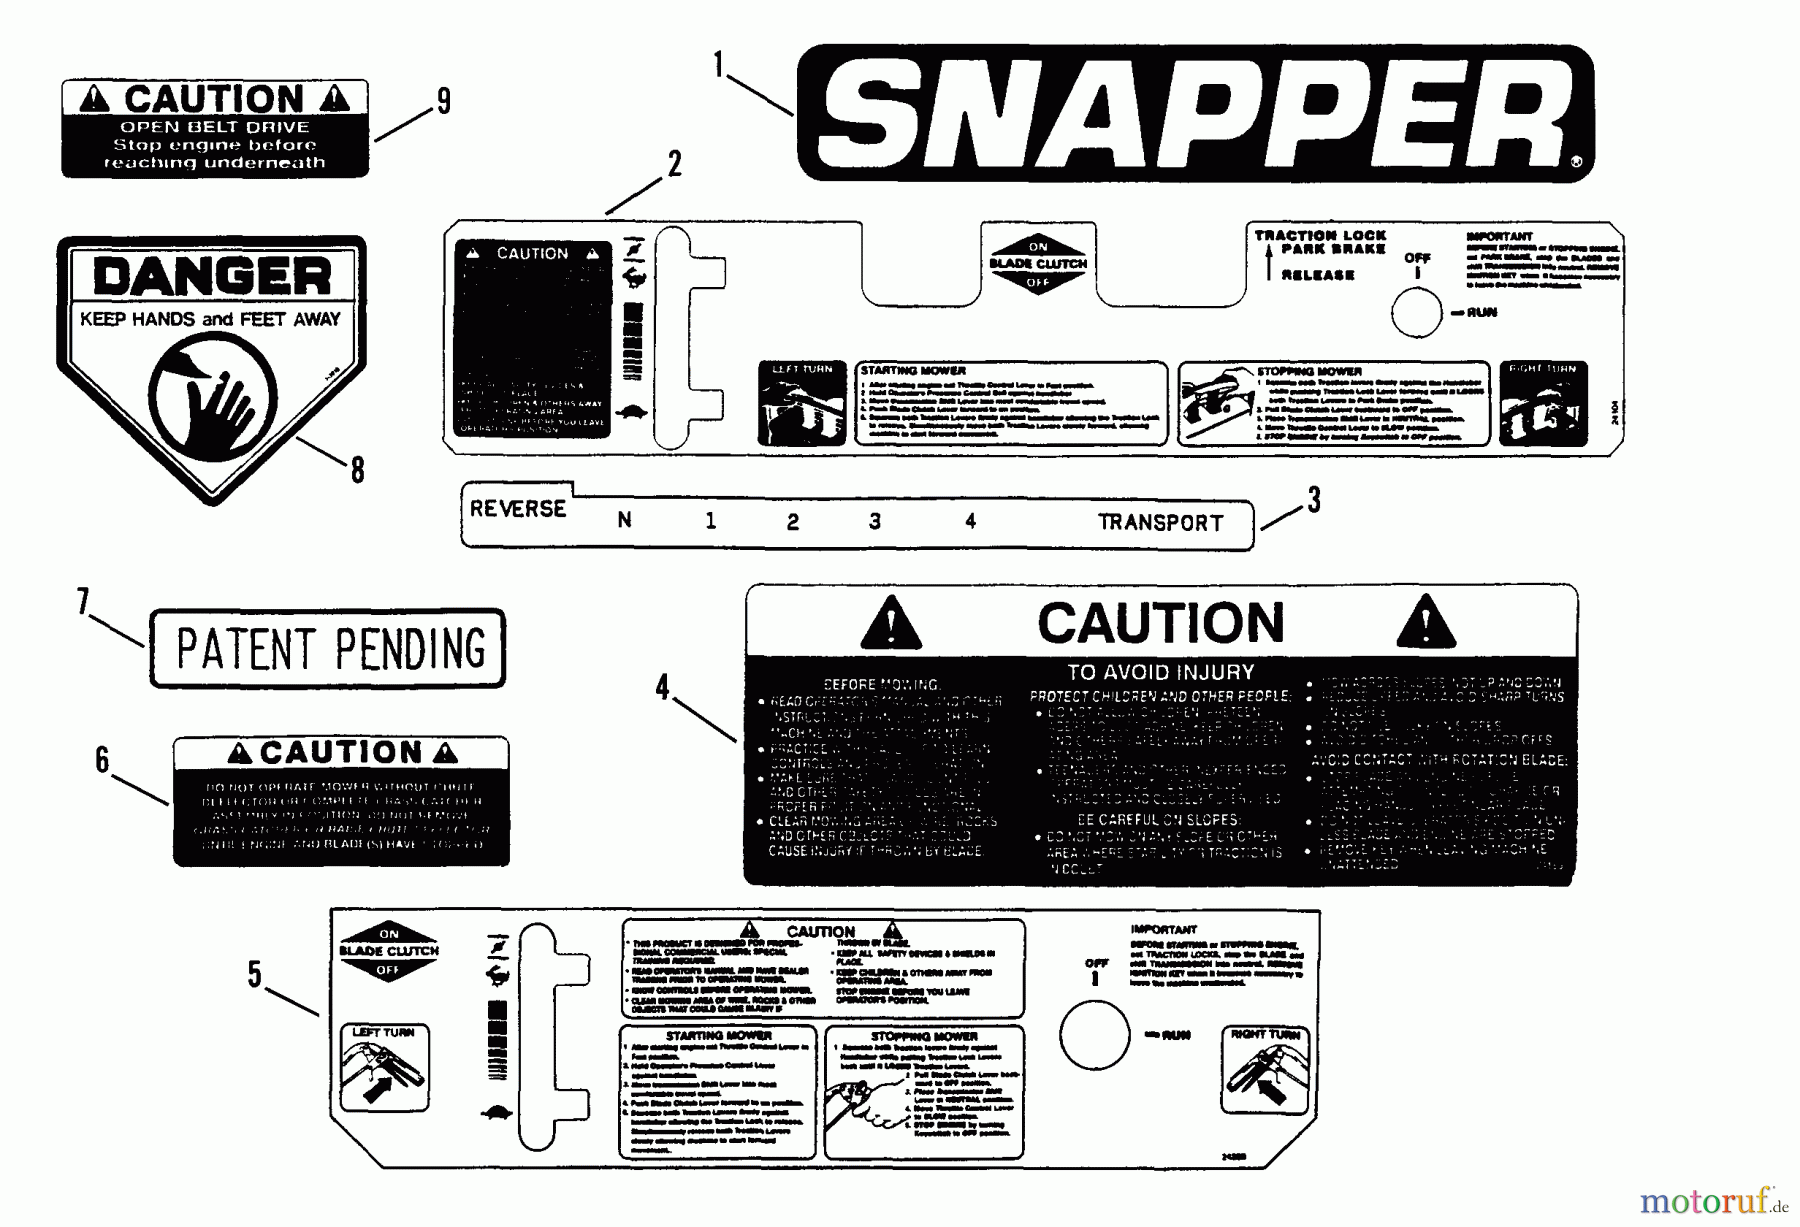  Snapper Rasenmäher für Großflächen PL71251KV - Snapper Wide-Area Walk-Behind Mower, 12.5 HP, Gear Drive, Loop Handle, Series 1 Decals